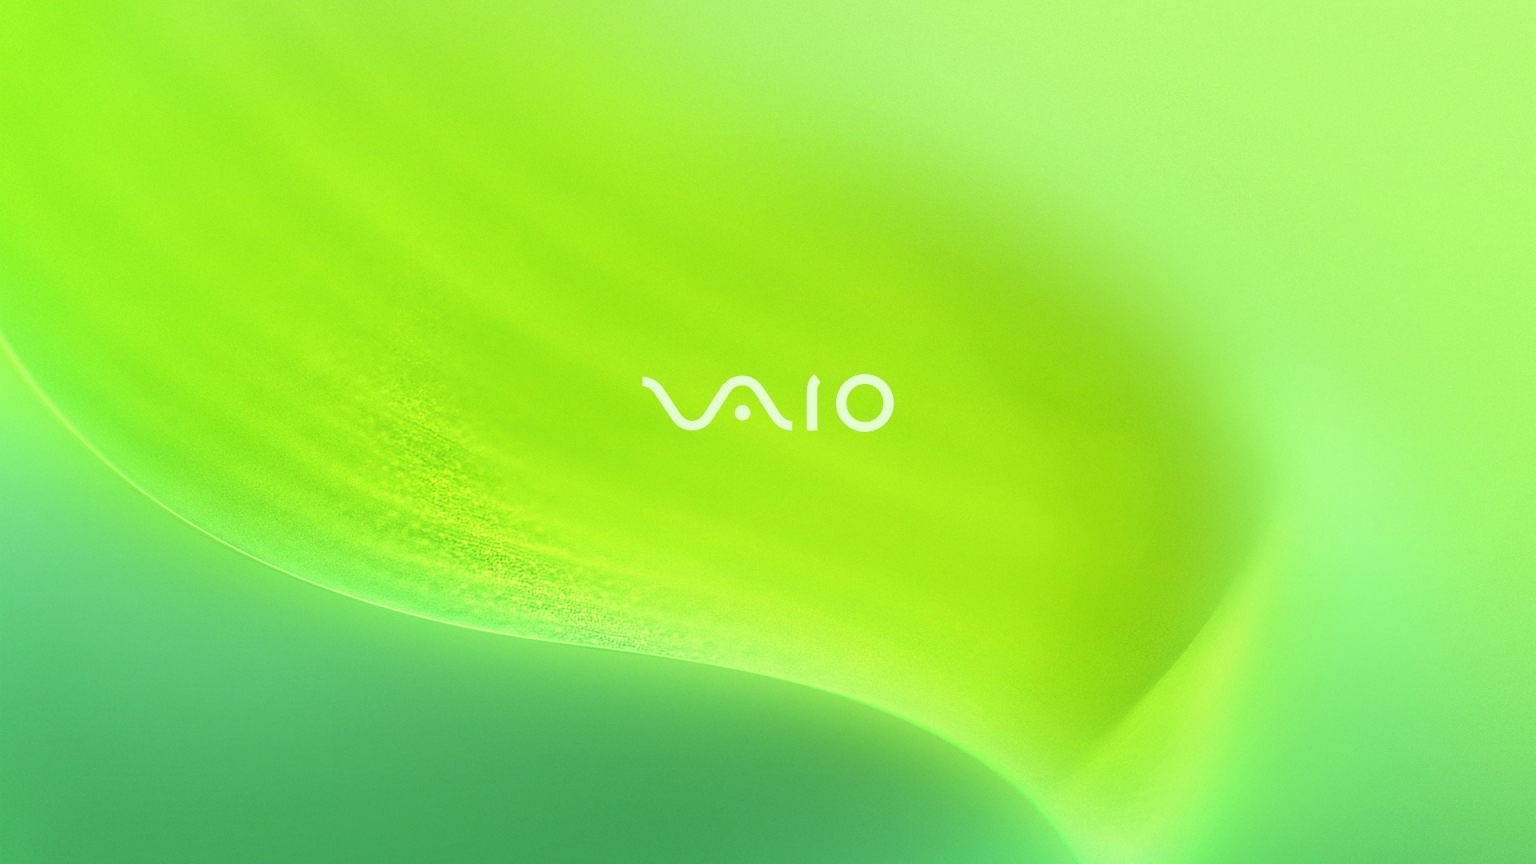 Vaio Green Leaf for 1536 x 864 HDTV resolution